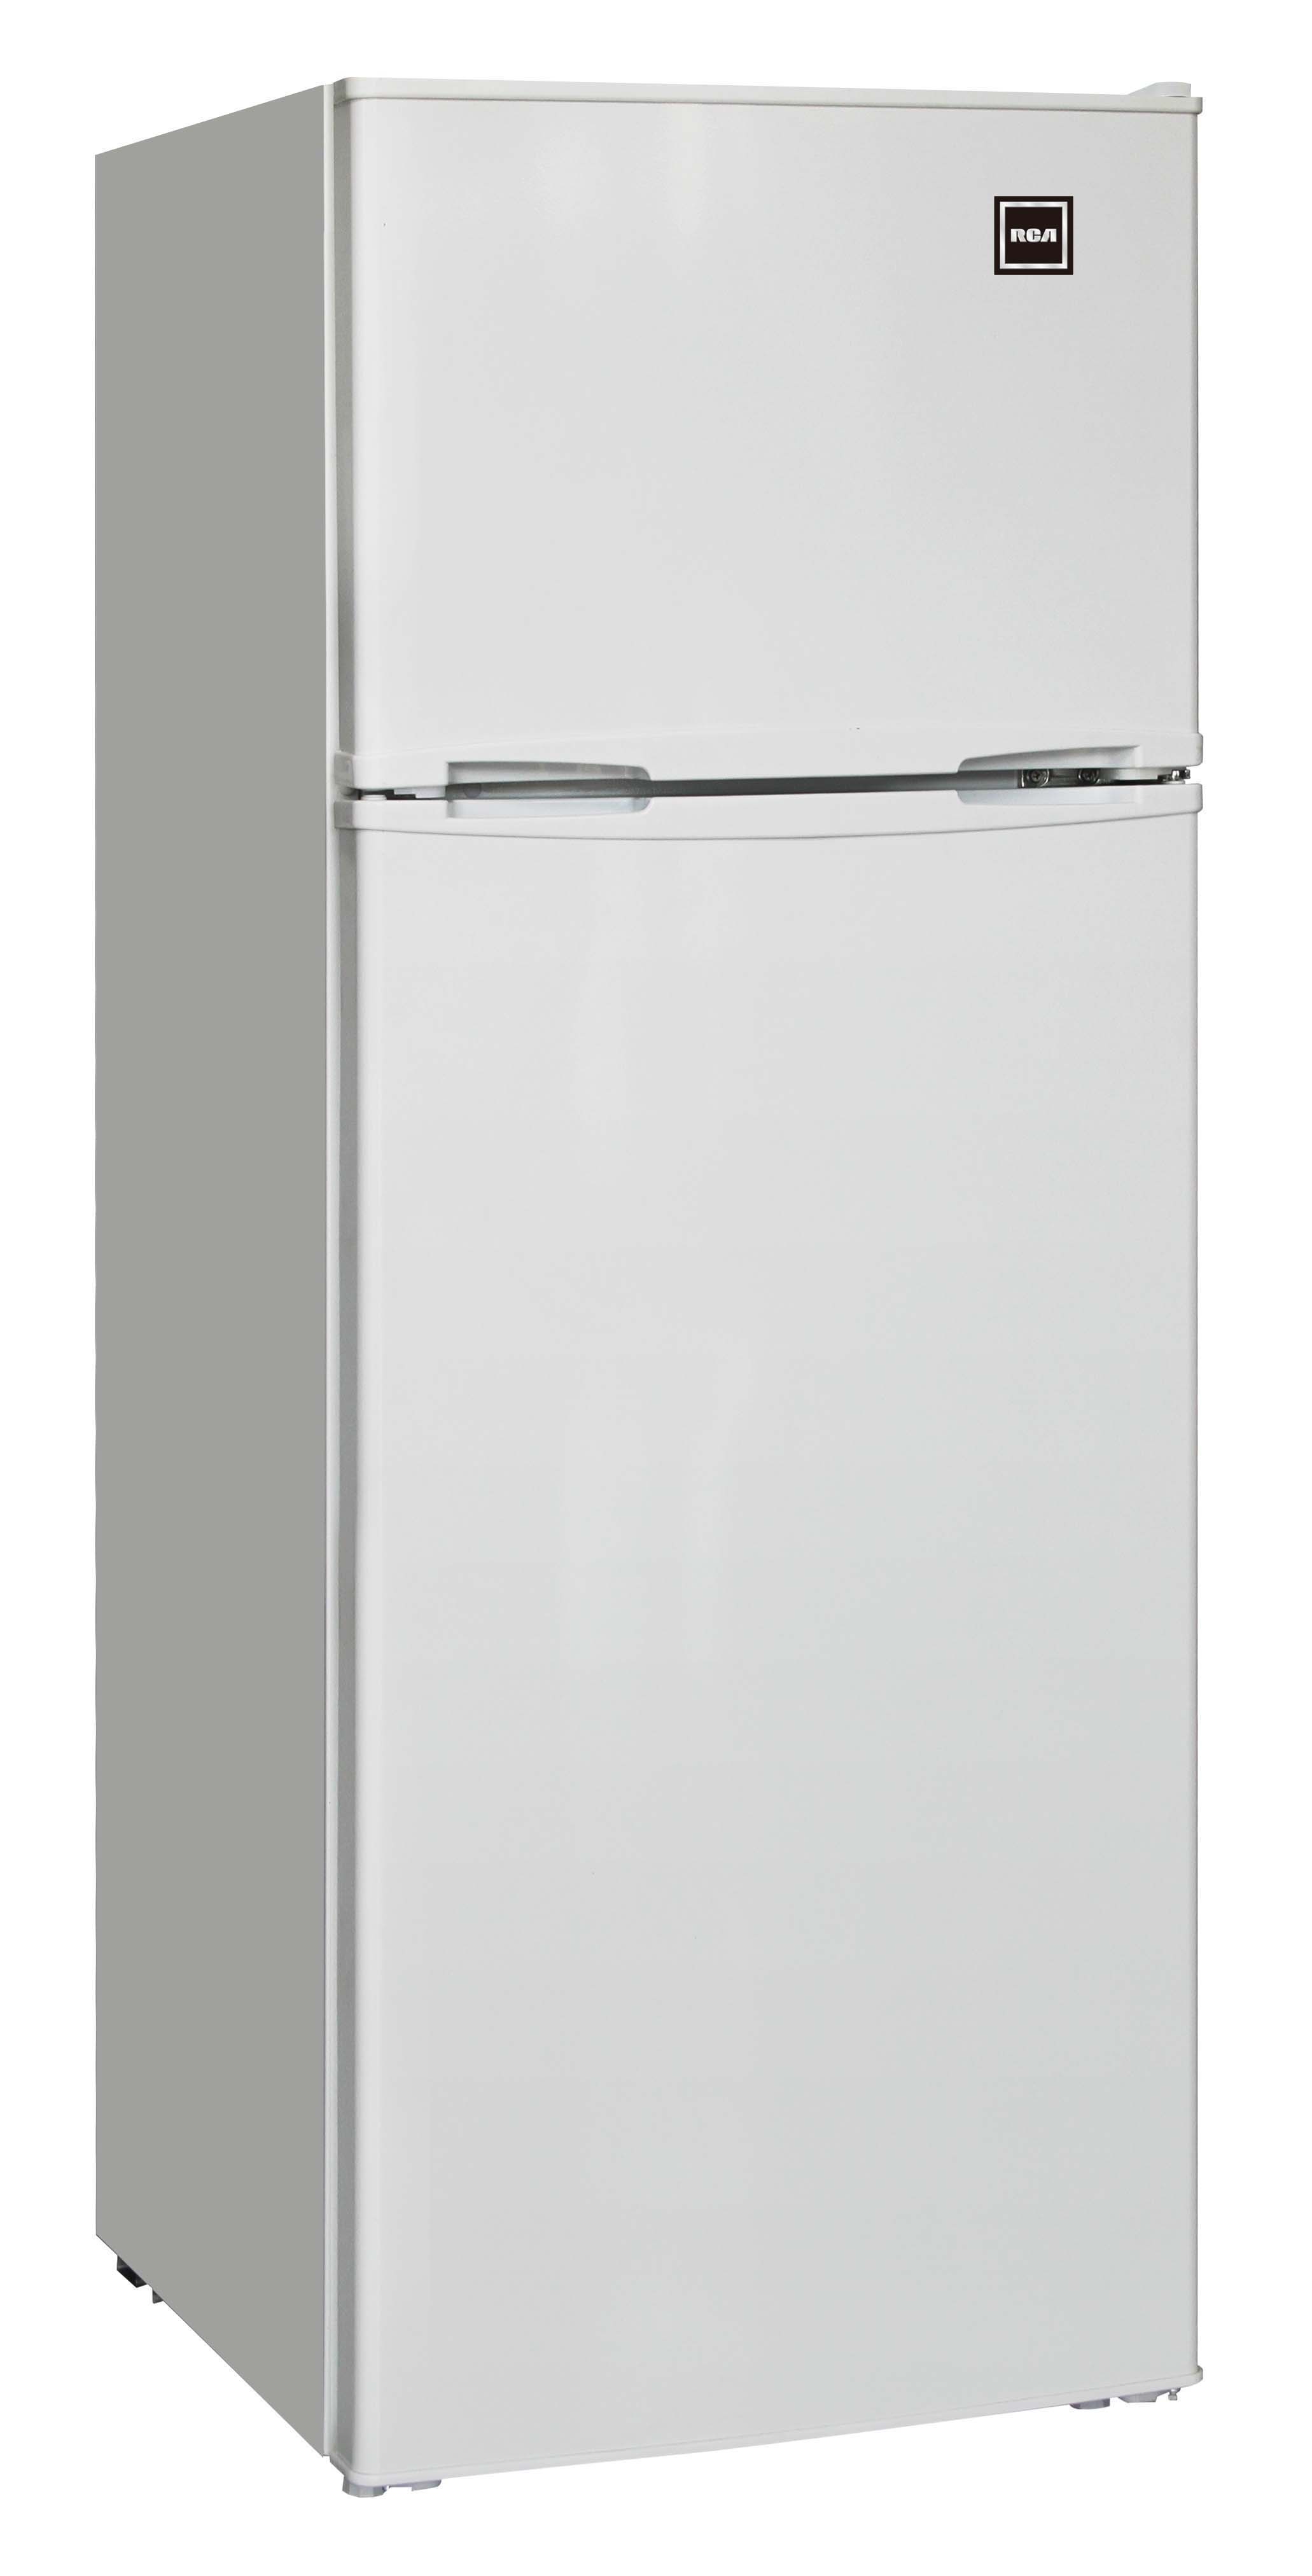 RCA 7.5 Cu. Ft. Top Freezer Refrigerator RFR741, White - image 1 of 3